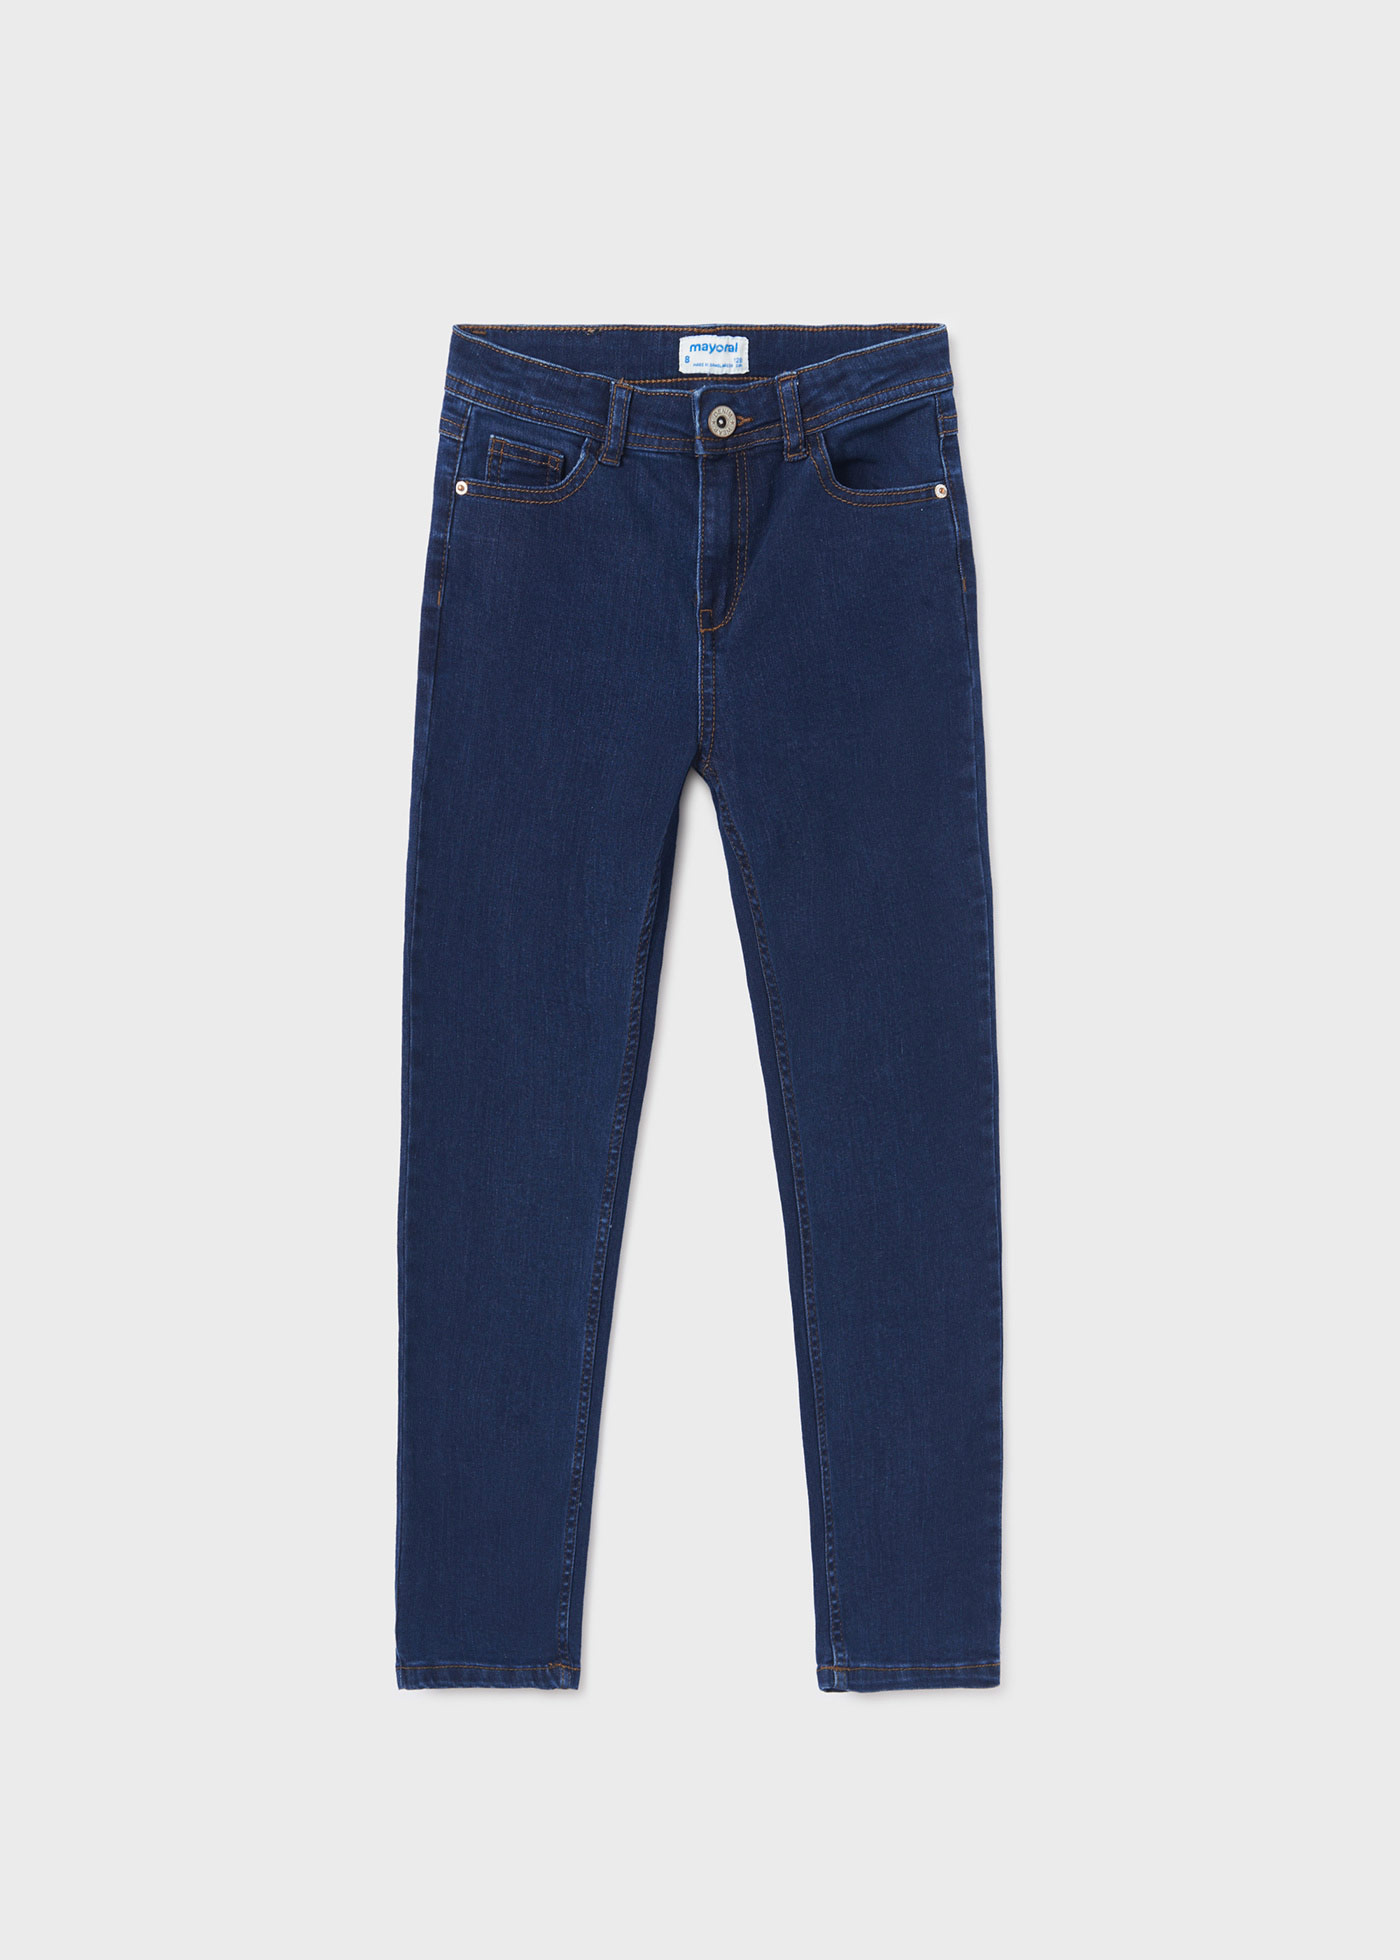 Denim Ladies Blue Slim Fit Jeans, Zipper, Size: 34 at Rs 290/piece in New  Delhi